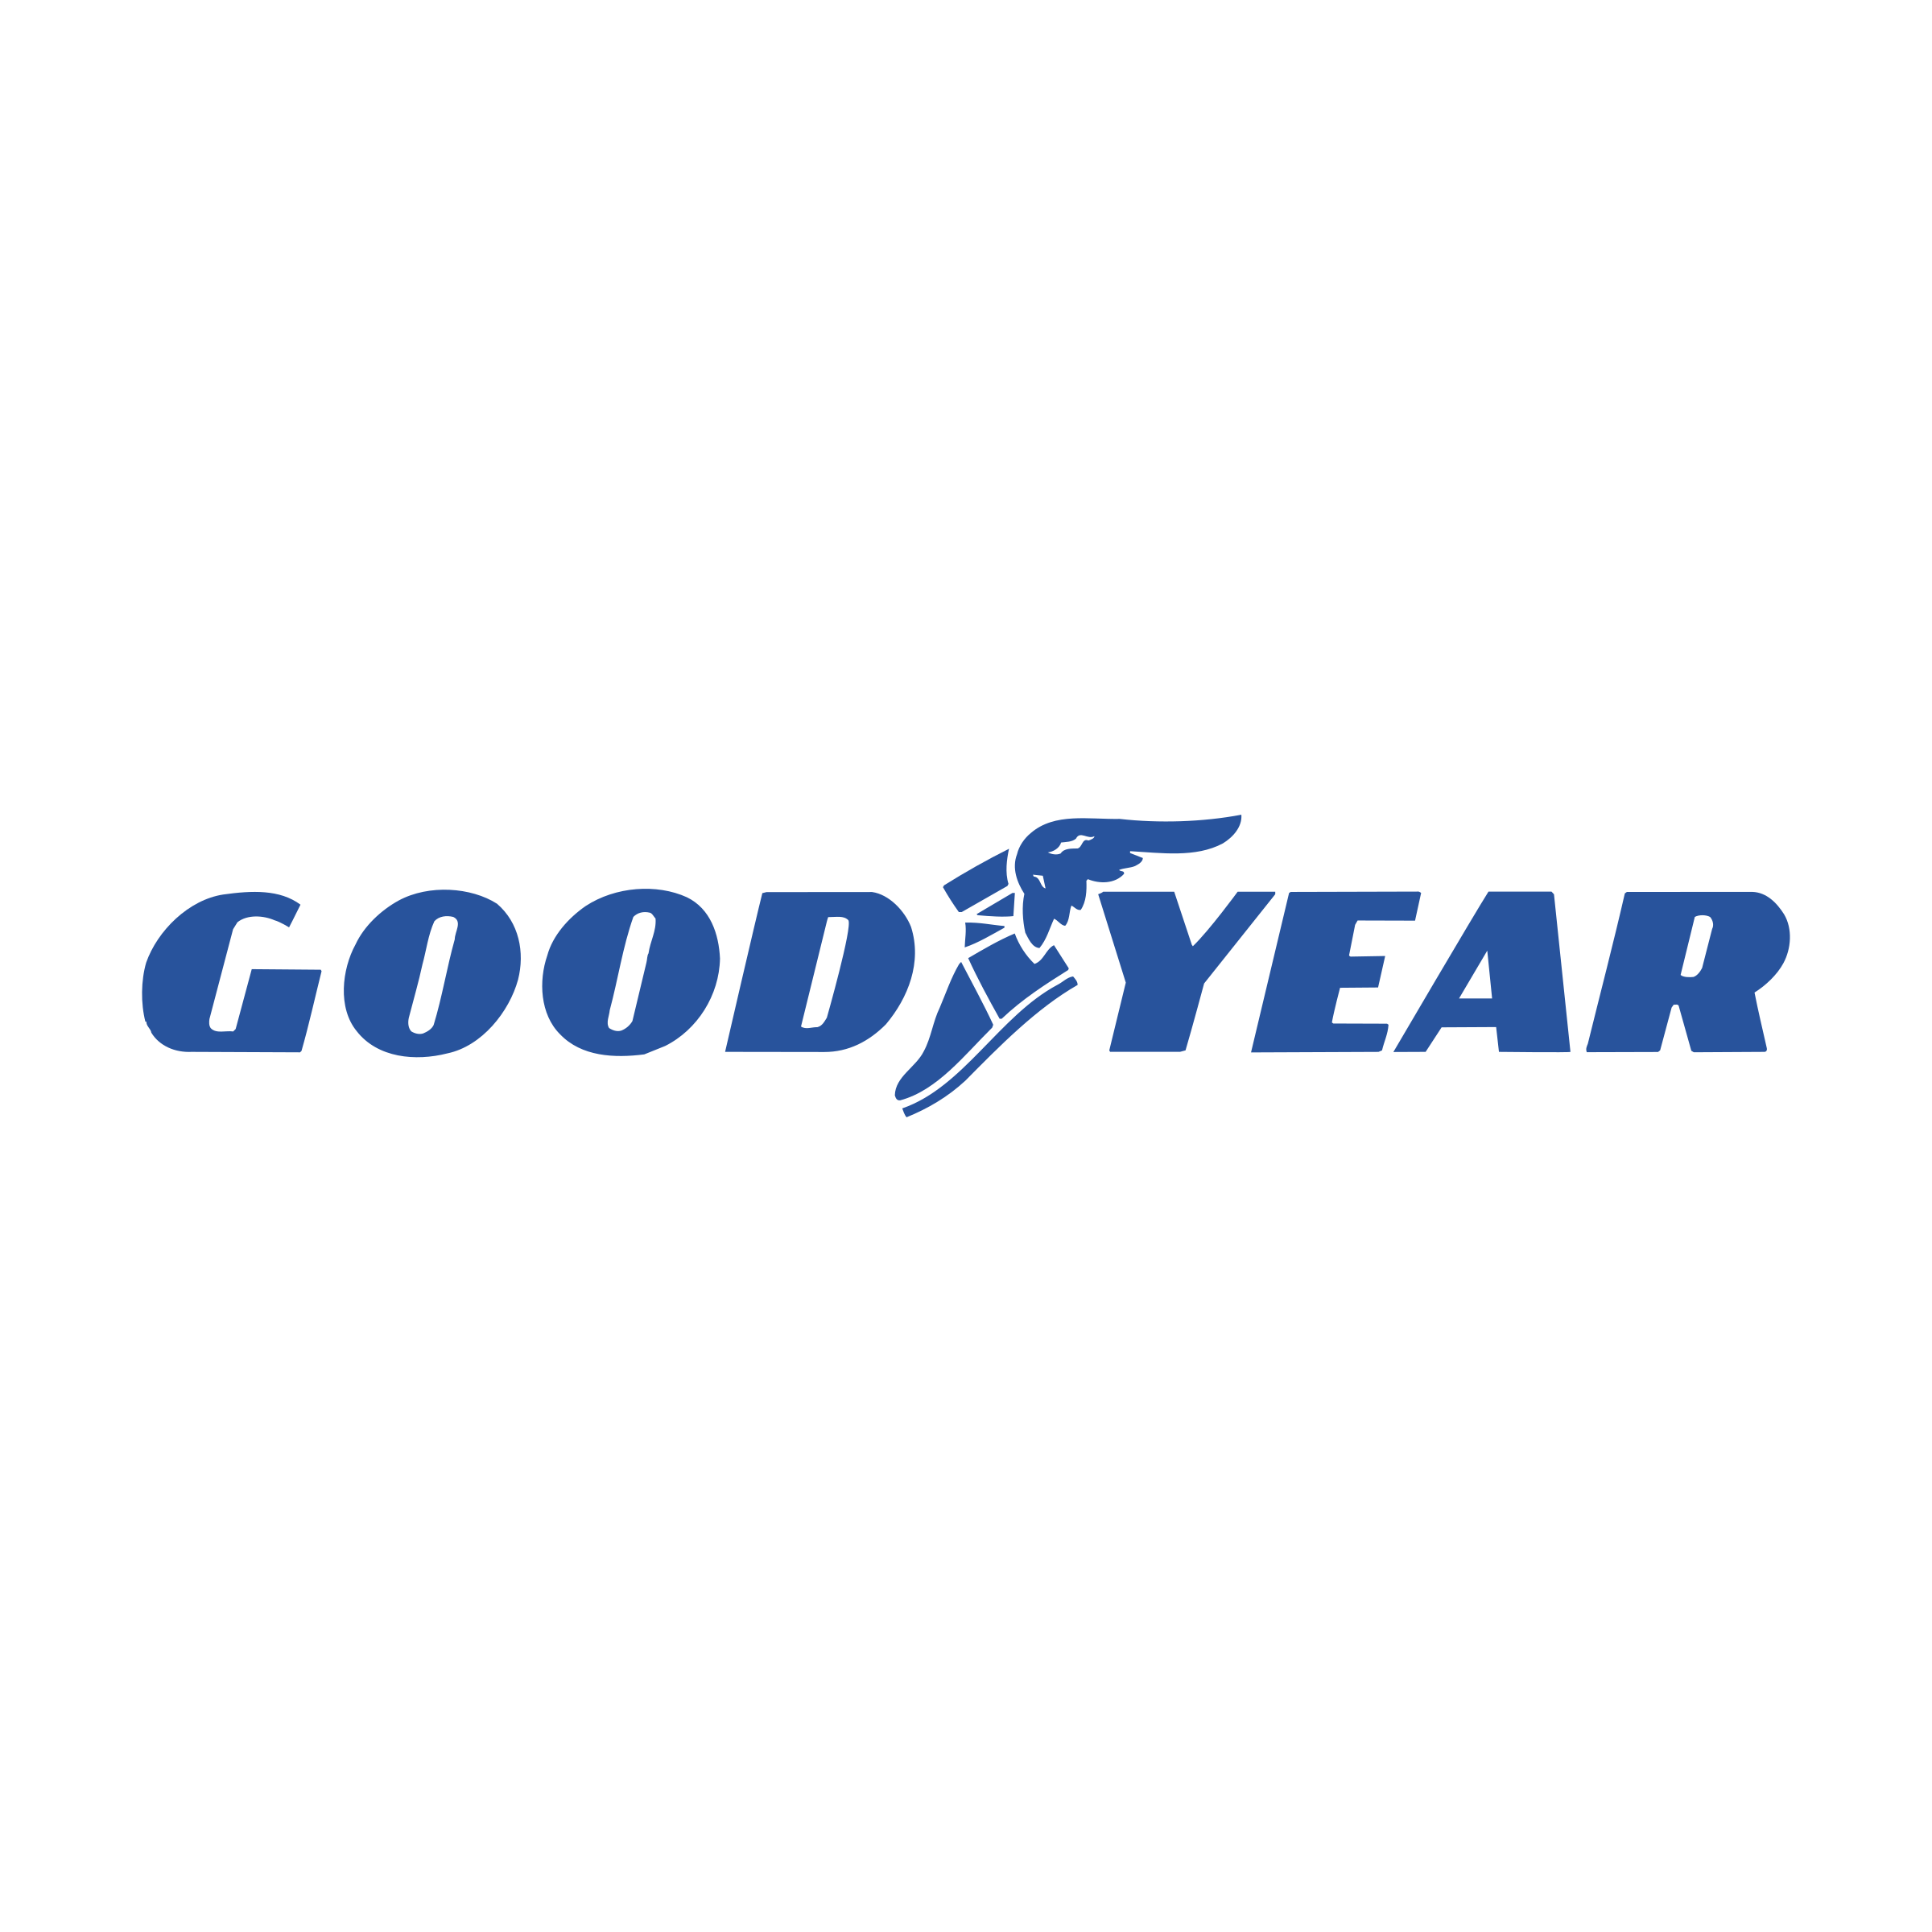 Goodyear Logo - Goodyear Logo PNG Transparent & SVG Vector - Freebie Supply